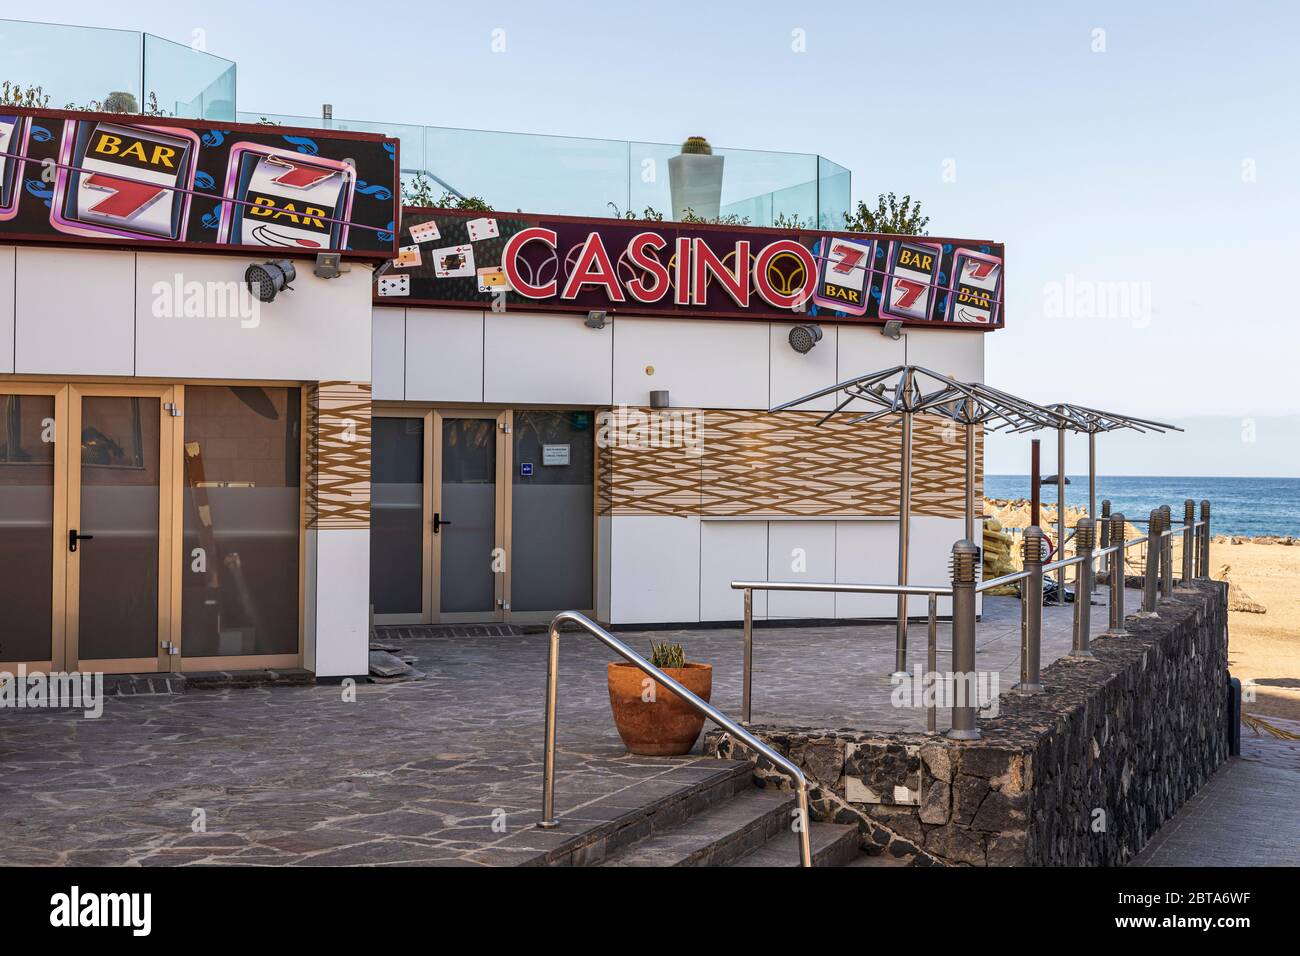 Playa de las americas casino hi-res stock photography and images - Alamy